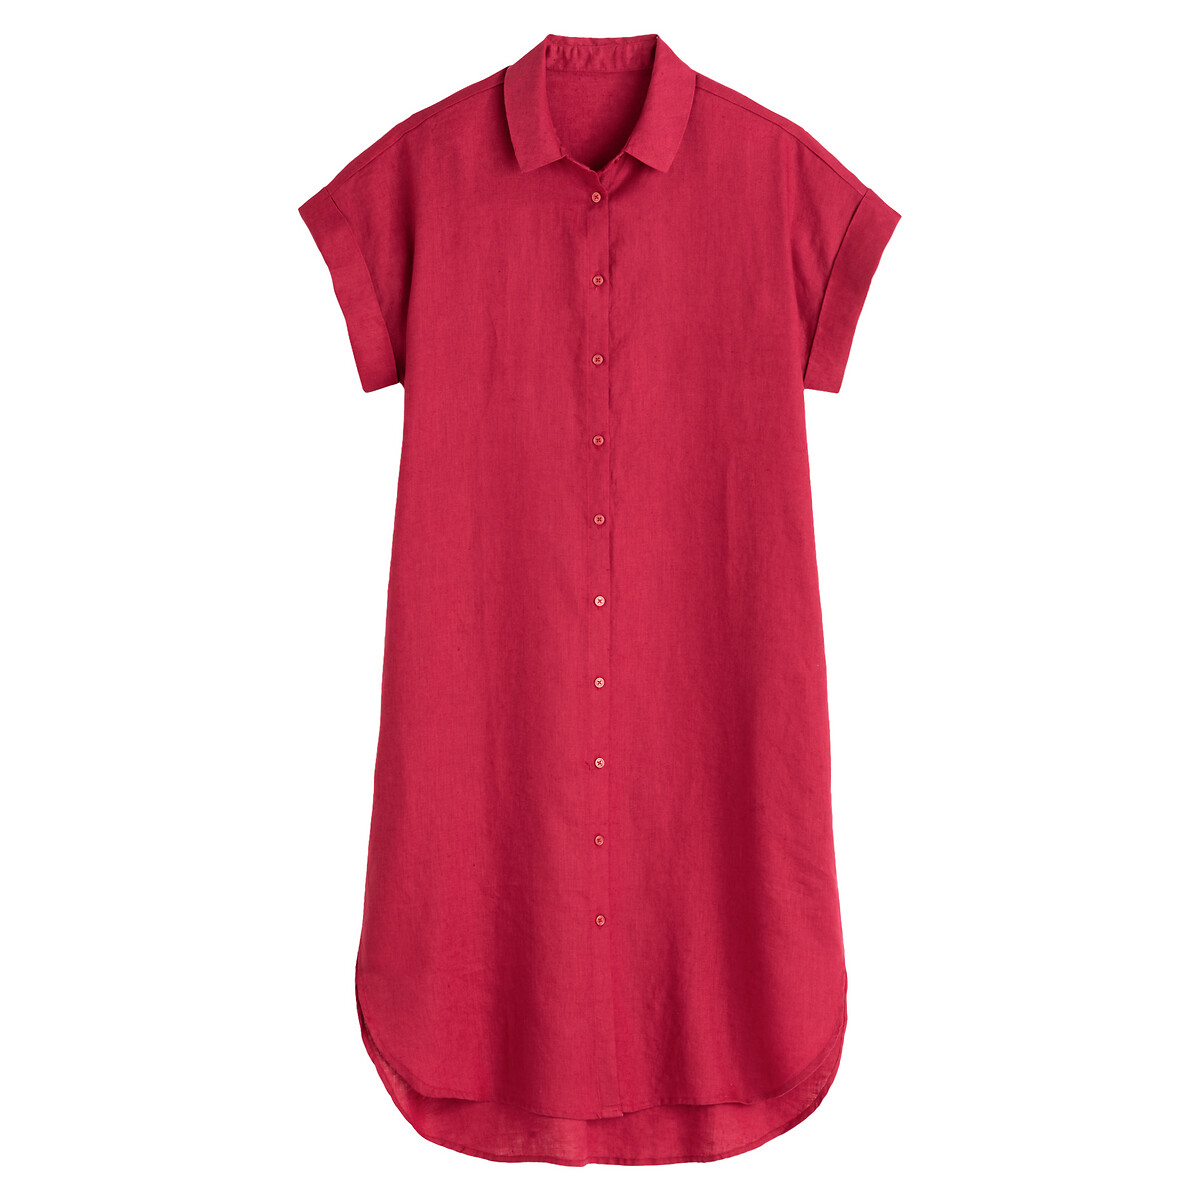 Платье-рубашка LaRedoute С короткими рукавами из льна 38 (FR) - 44 (RUS) розовый, размер 38 (FR) - 44 (RUS) С короткими рукавами из льна 38 (FR) - 44 (RUS) розовый - фото 5